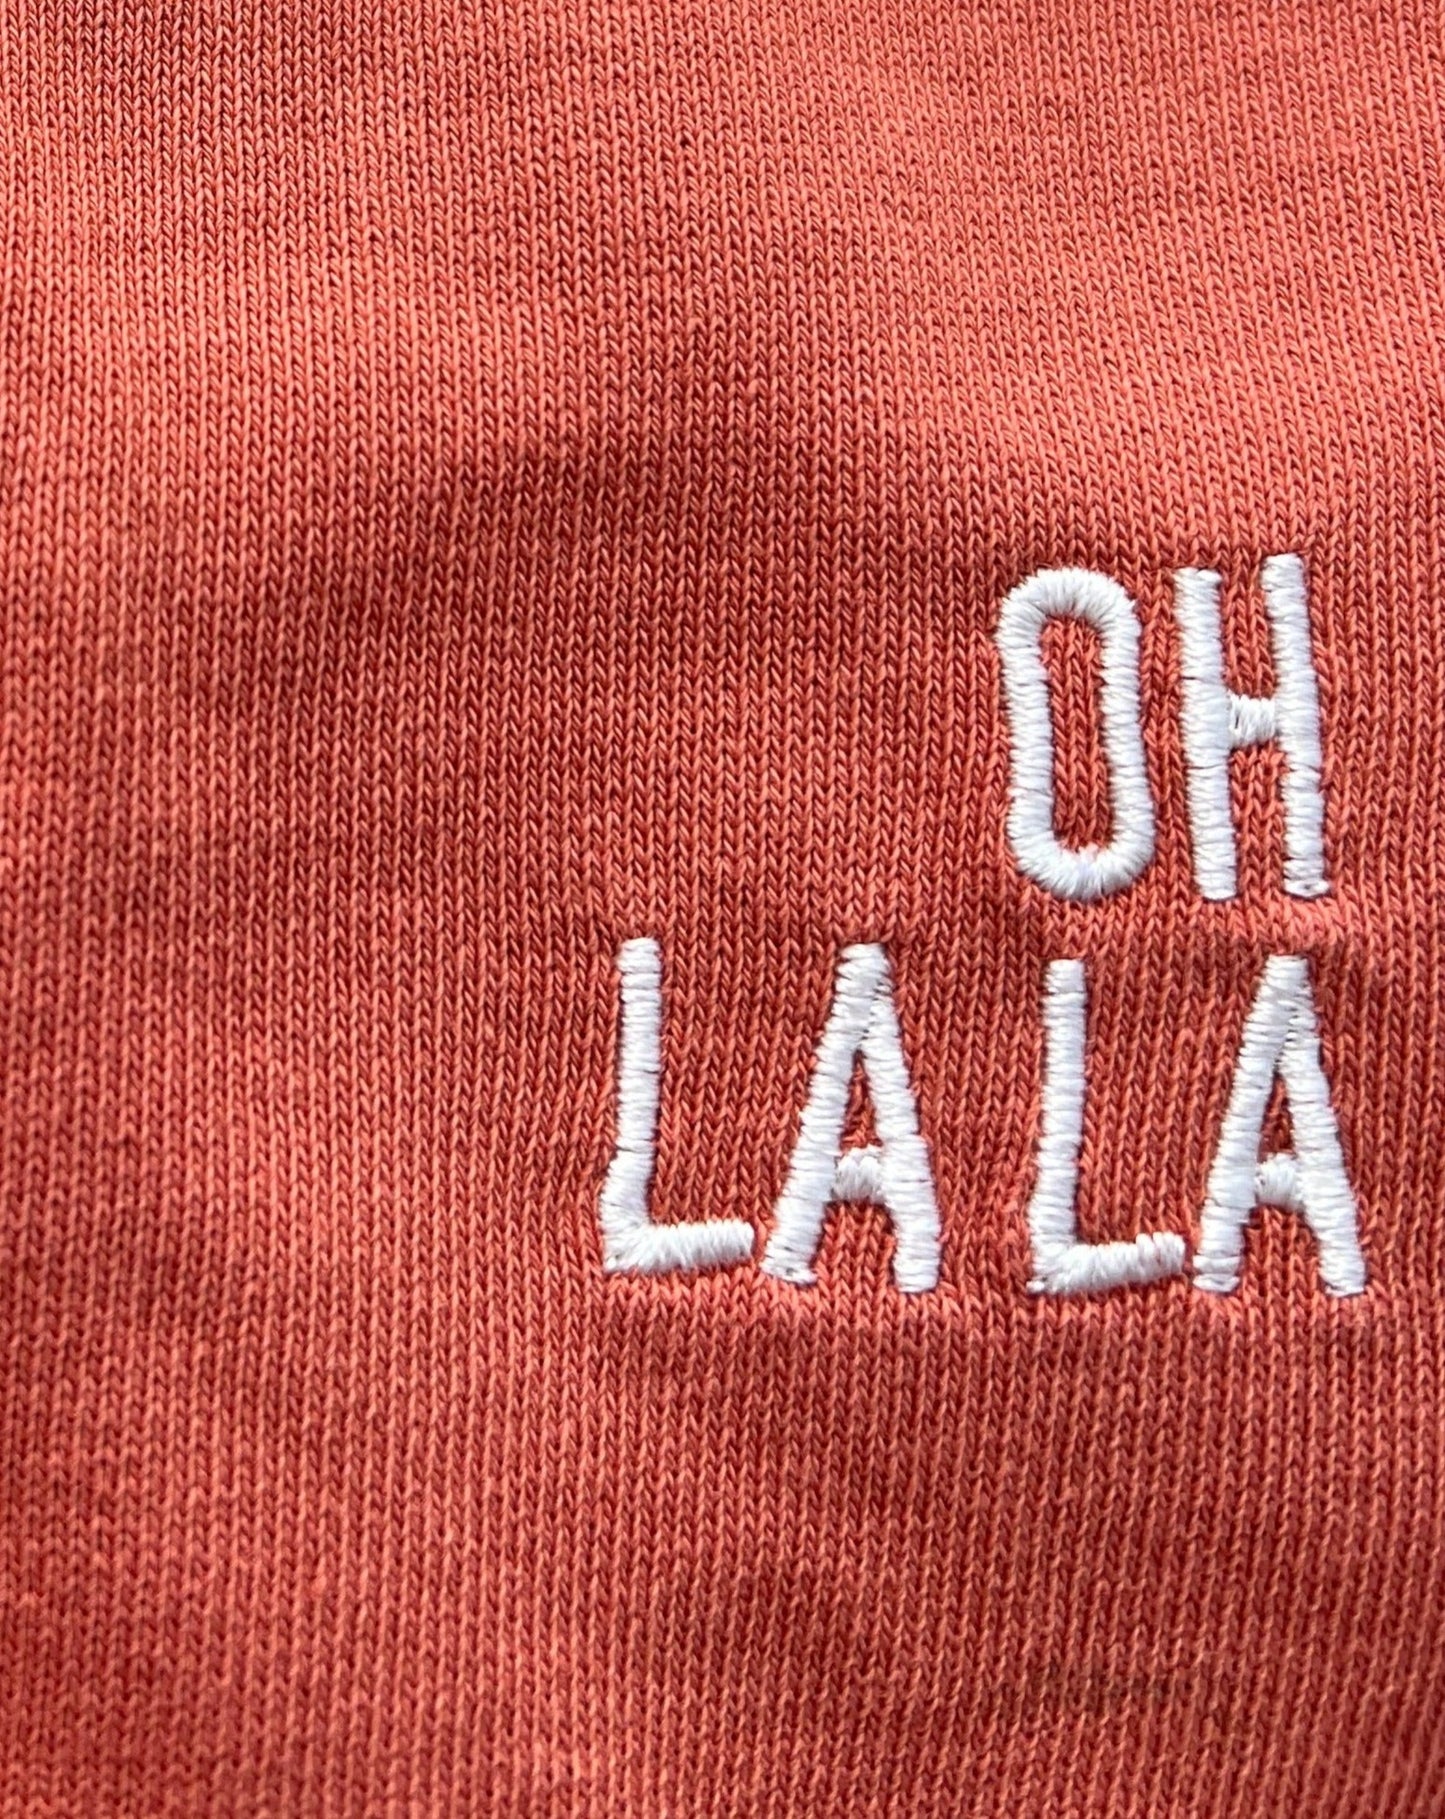 "Oh La La" Unisex-Sweatshirt von @lena.bleibt.hier